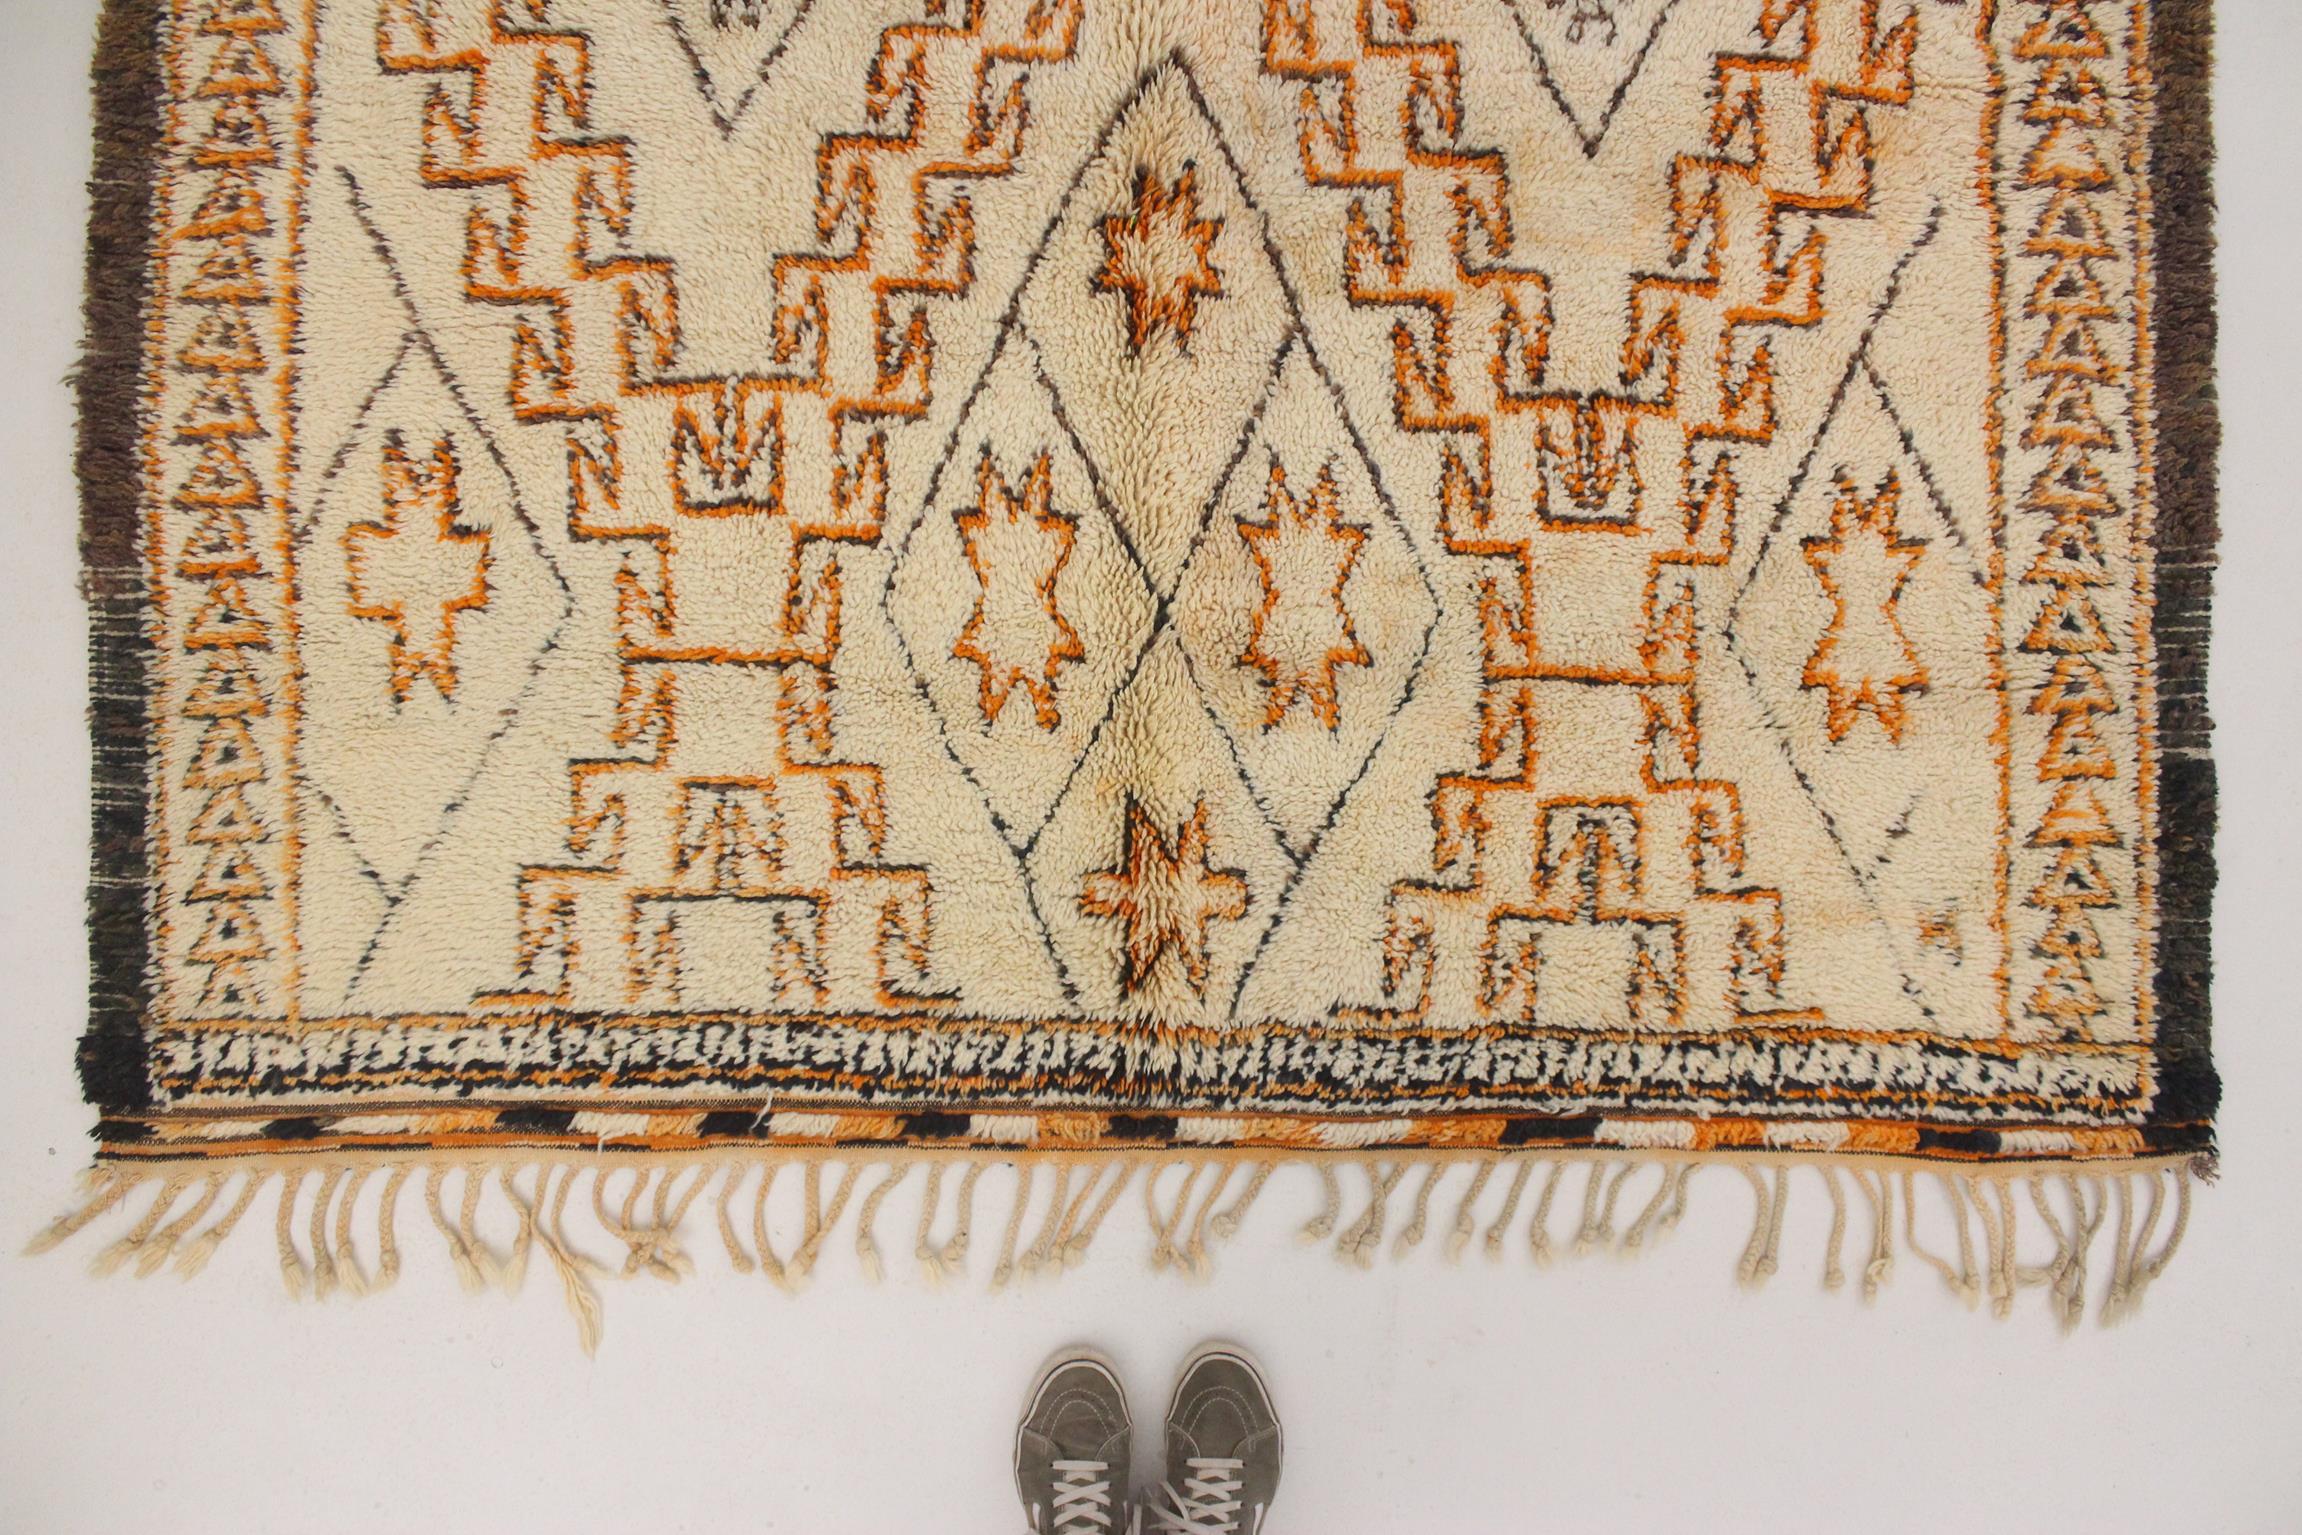 Vintage Moroccan Beni Ourain rug - Beige/orange - 6.2x11.1feet / 190x340cm For Sale 2